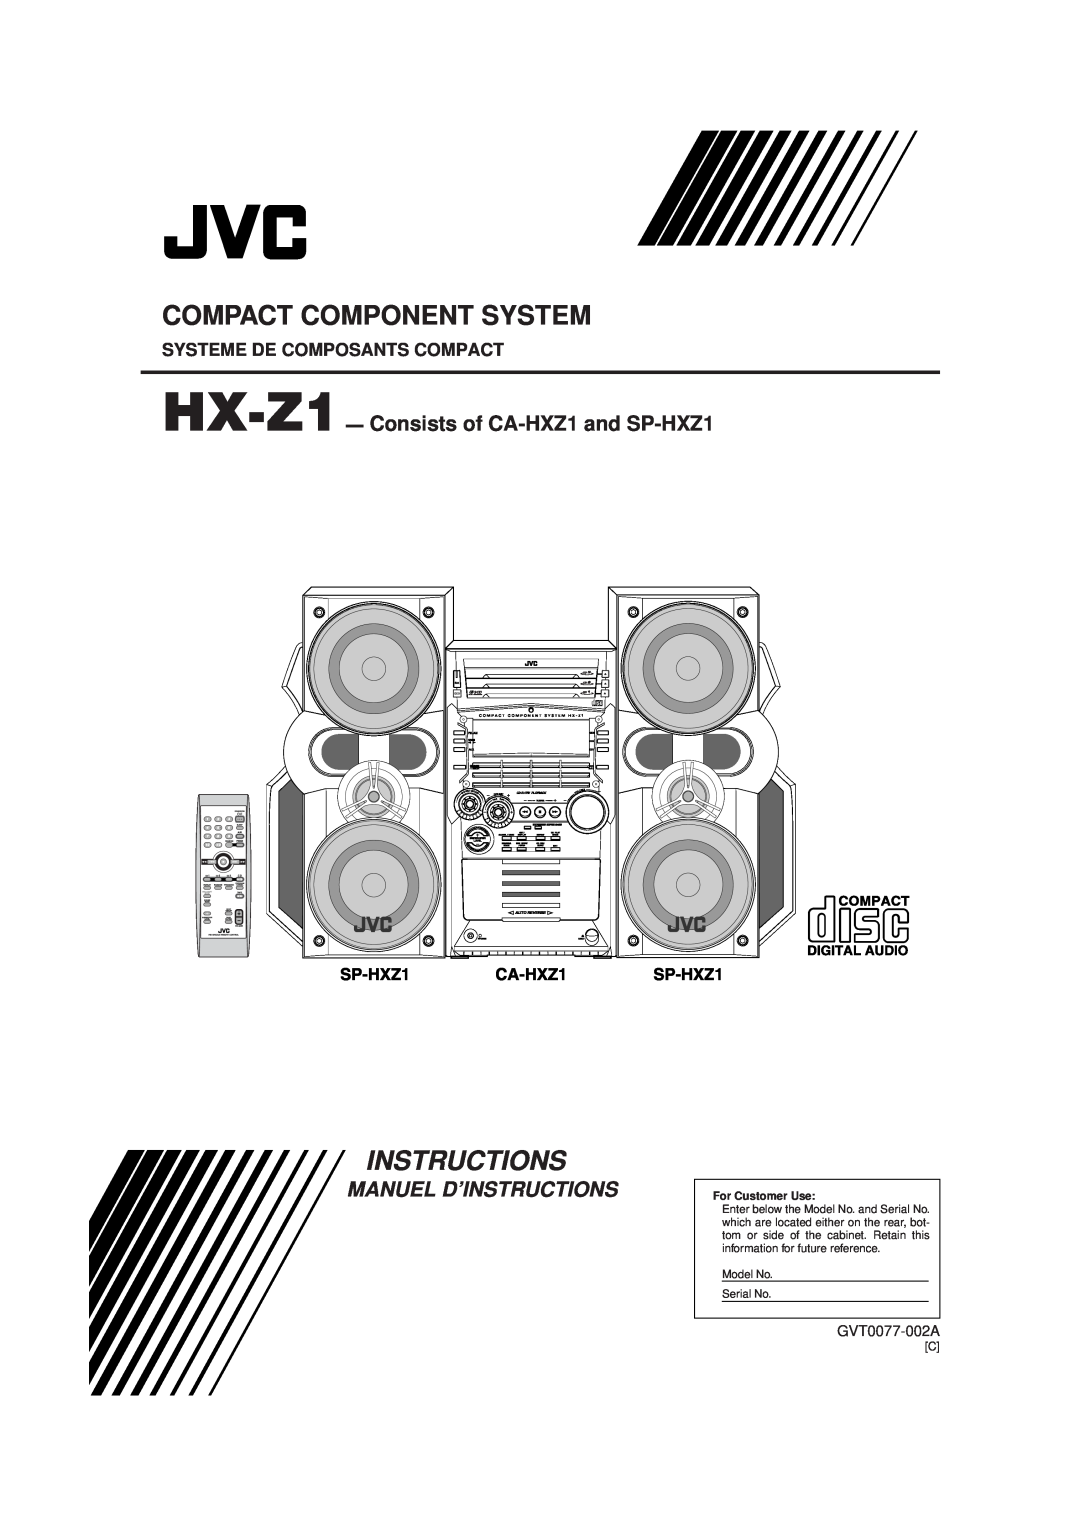 JVC Systeme De Composants Compact, Compact Component System, Instructions, HX-Z1- Consists of CA-HXZ1and SP-HXZ1, Olume 